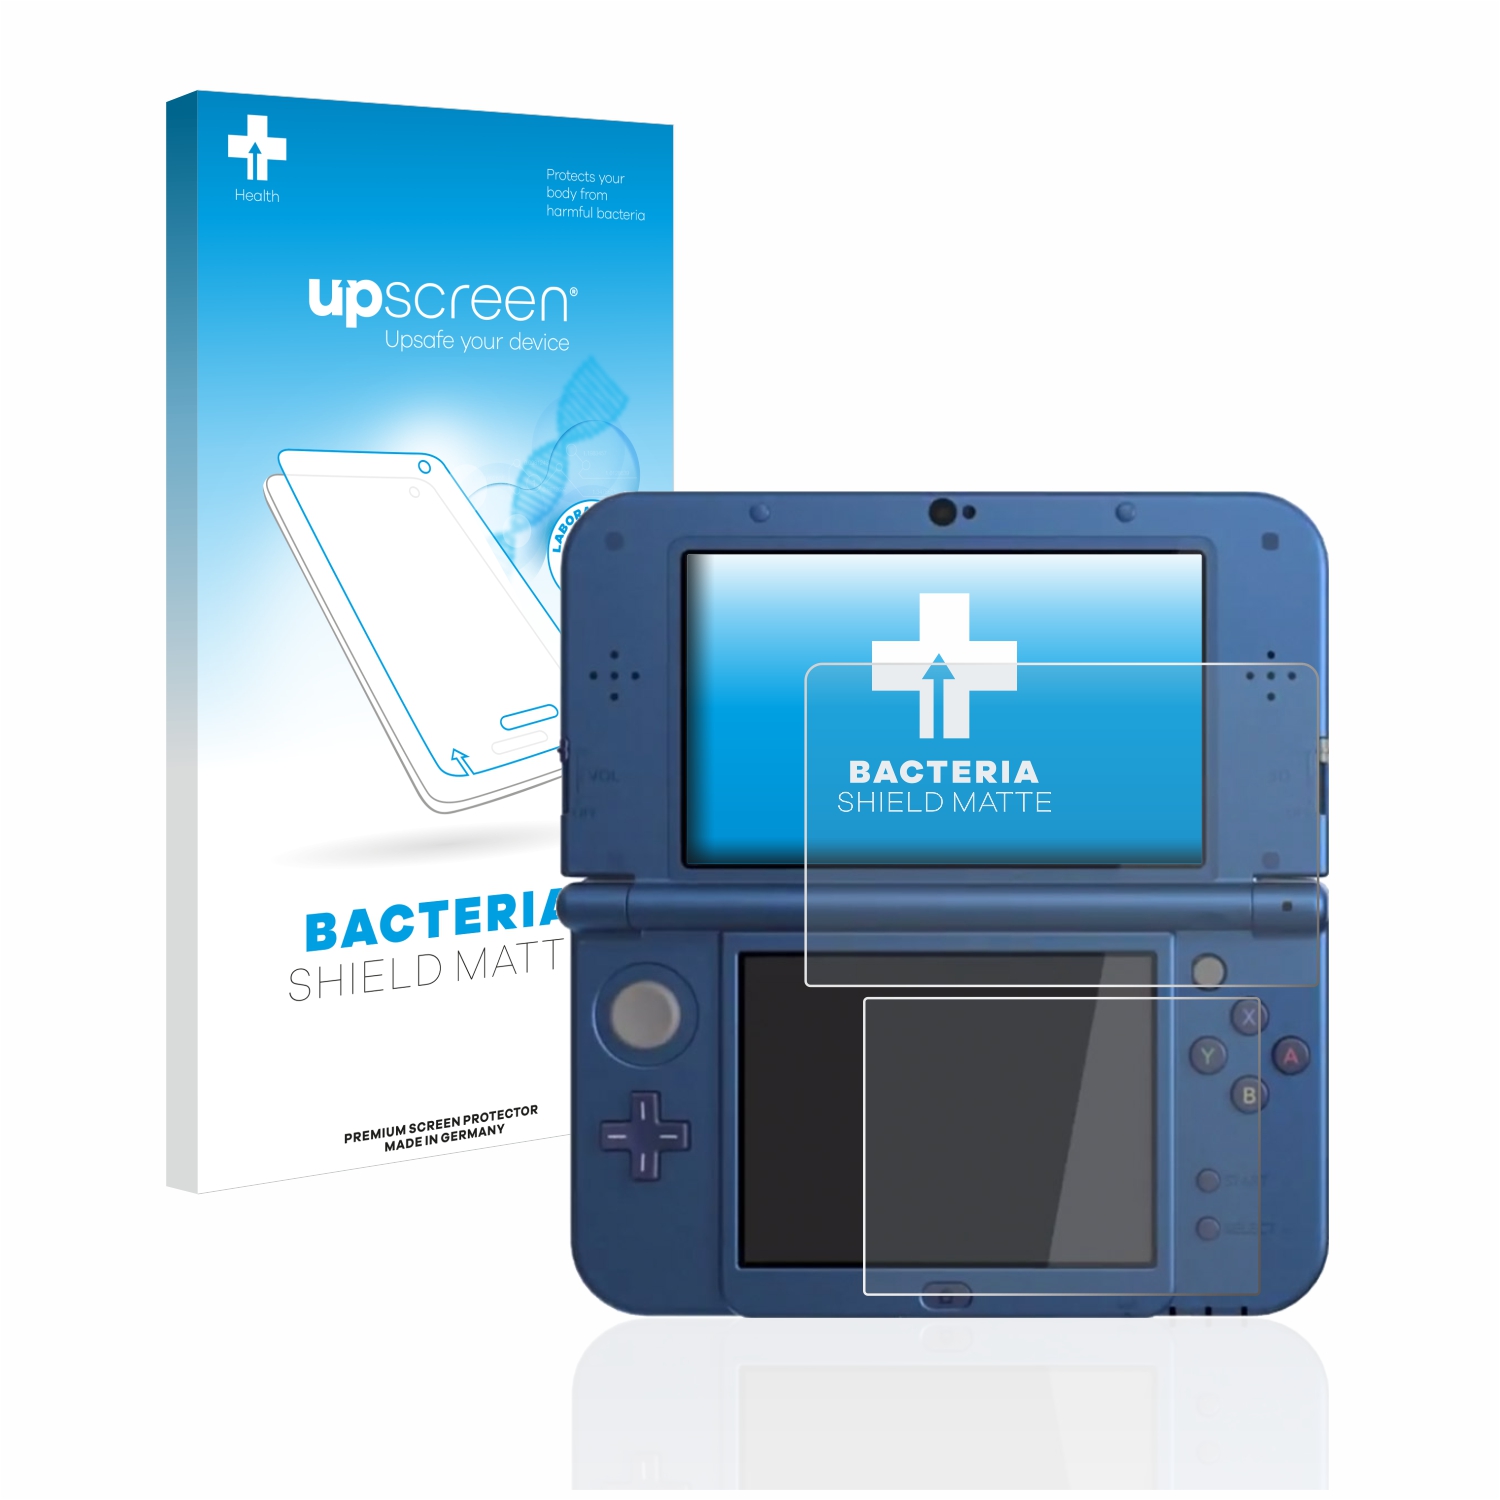 Upscreen Bacteria Shield Matte Premium Antibacterial Screen Protector For Nintendo New 3ds Xl Protectionfilms24 Com